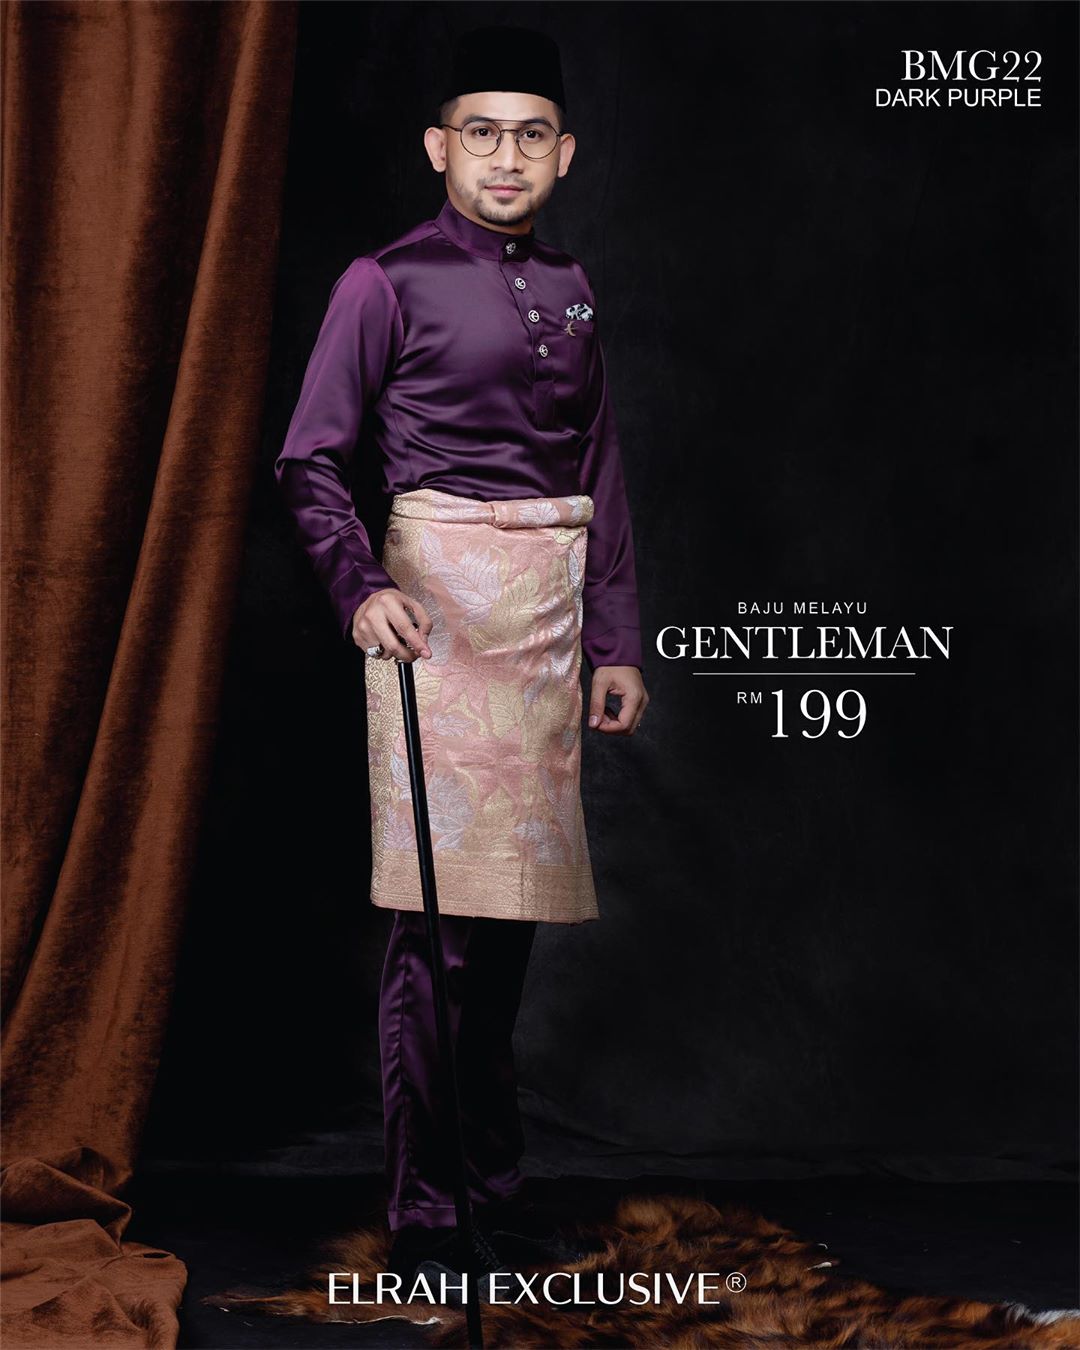 Baju Melayu Gentleman Dark Purple